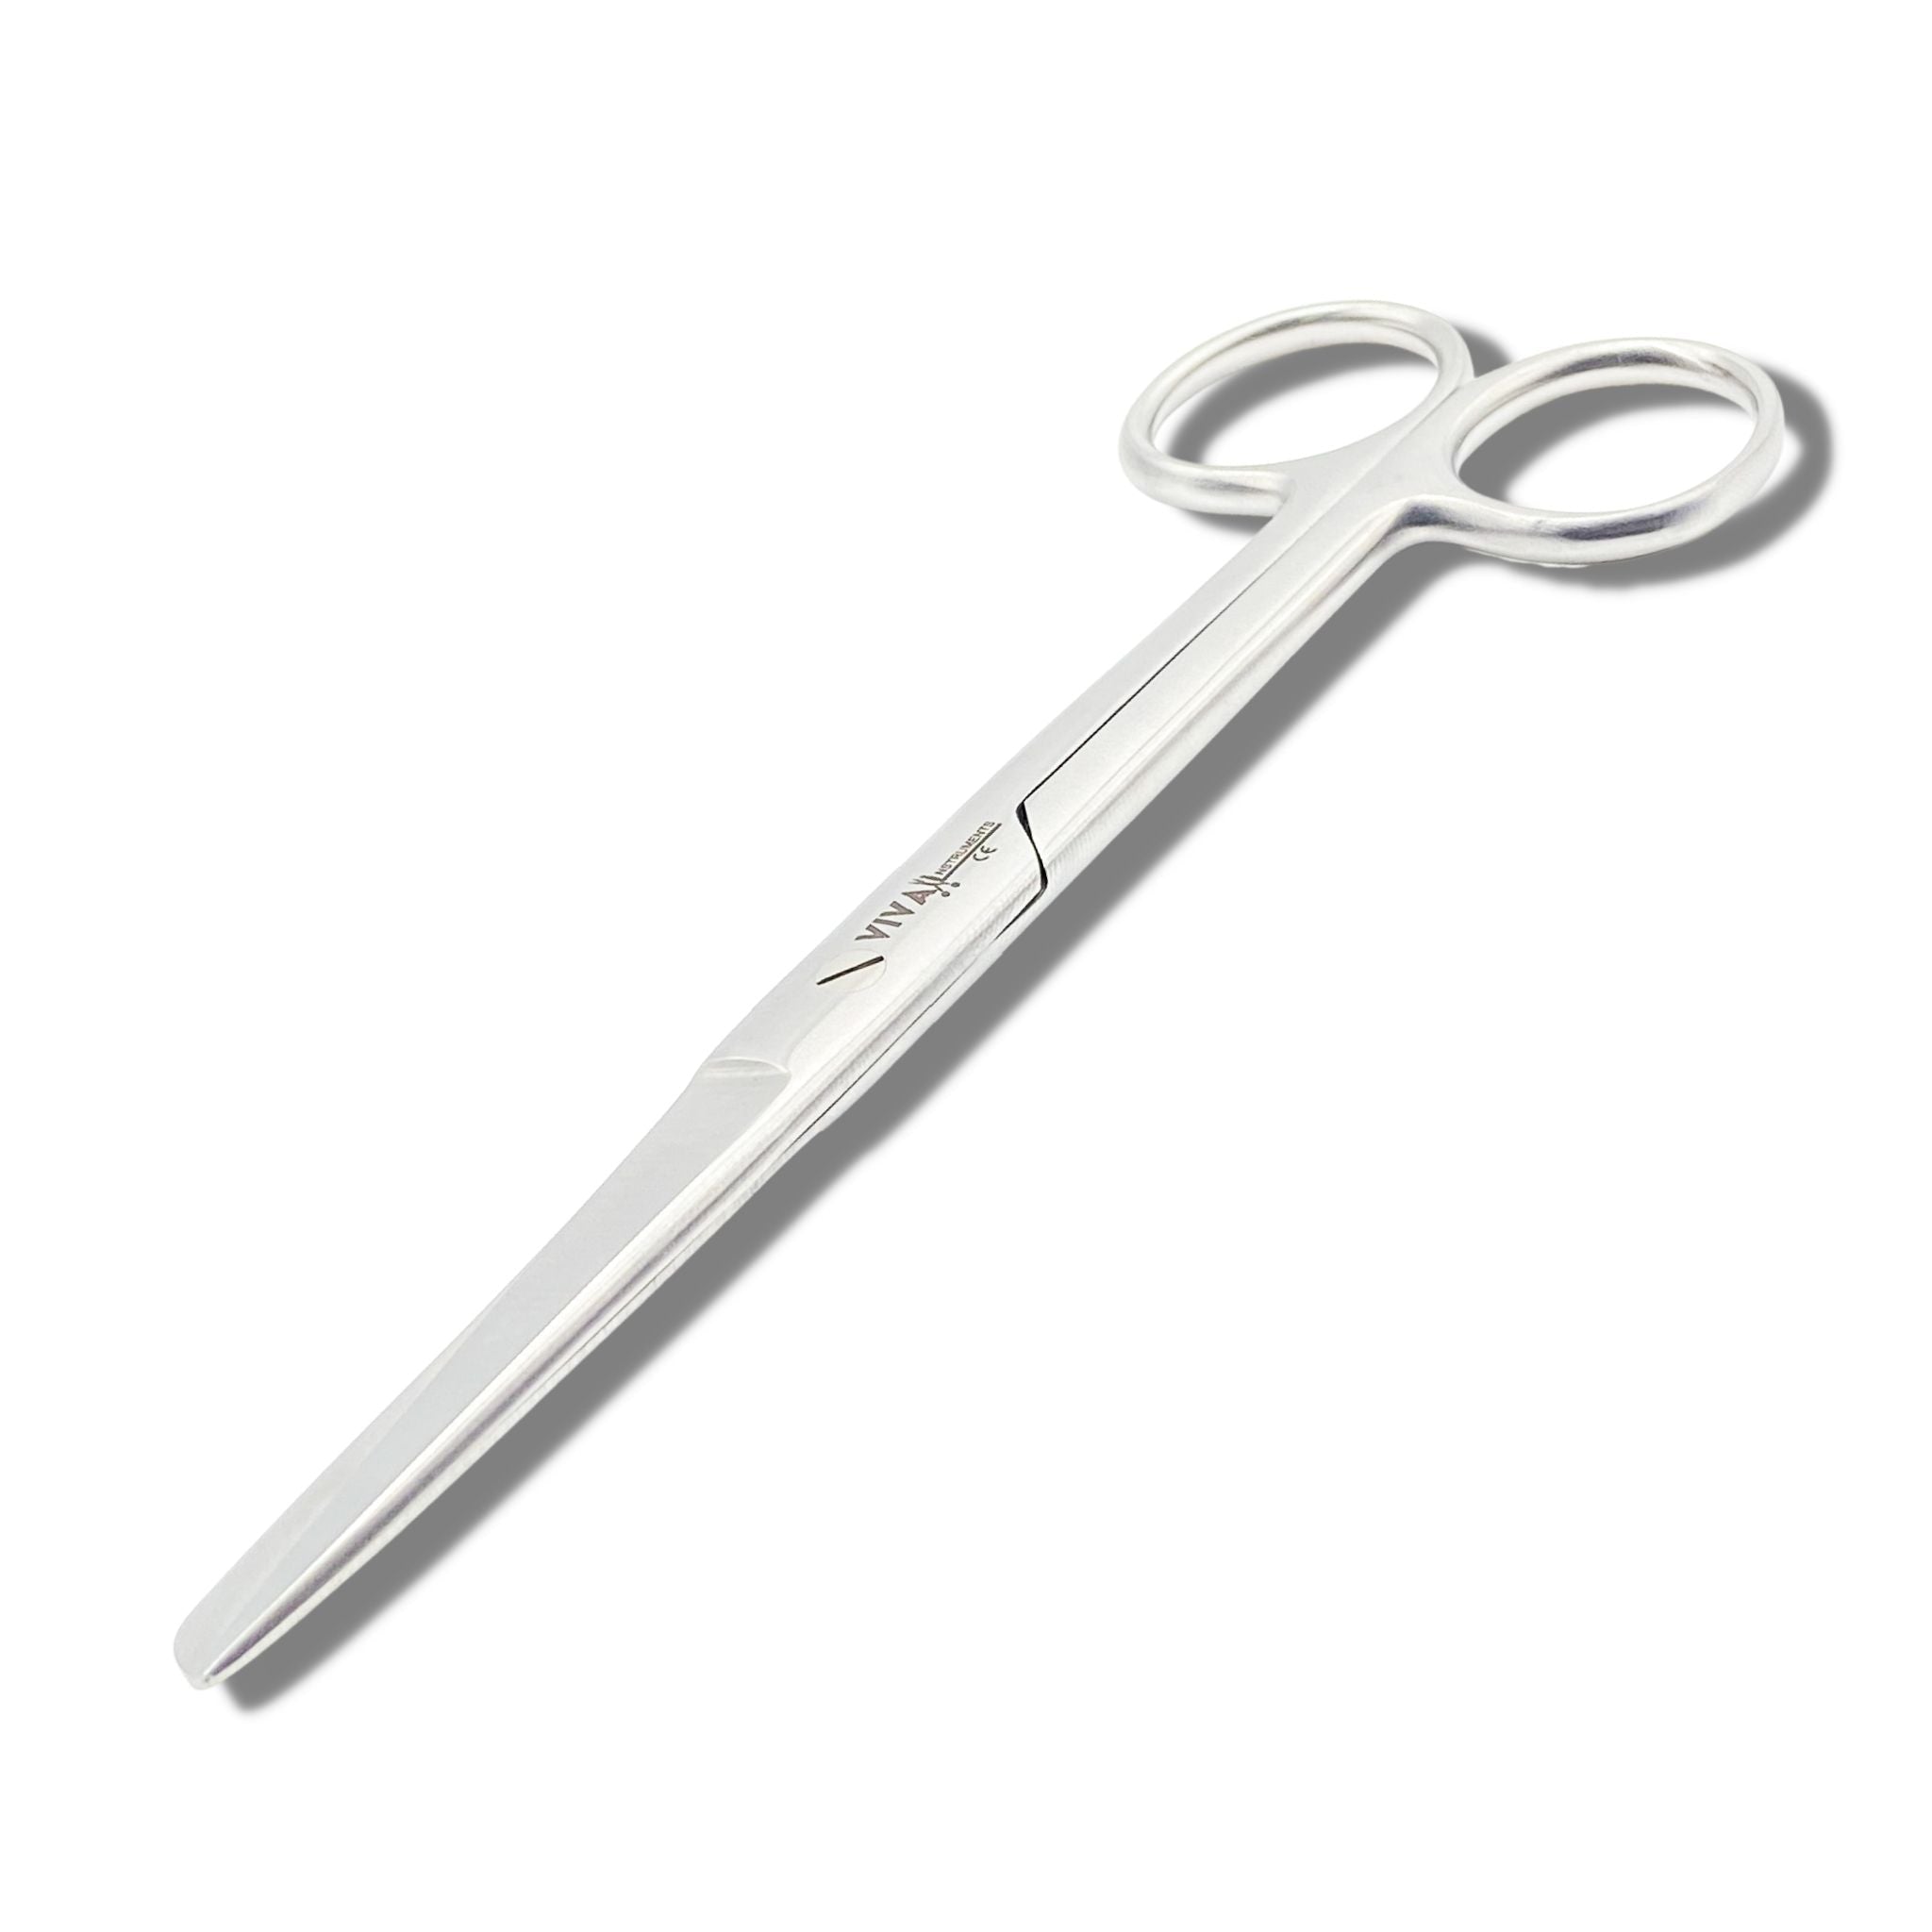 Scissor - Dressing Scissor 12.5cm Blunt Sharp - Surgical Podiatry Instruments